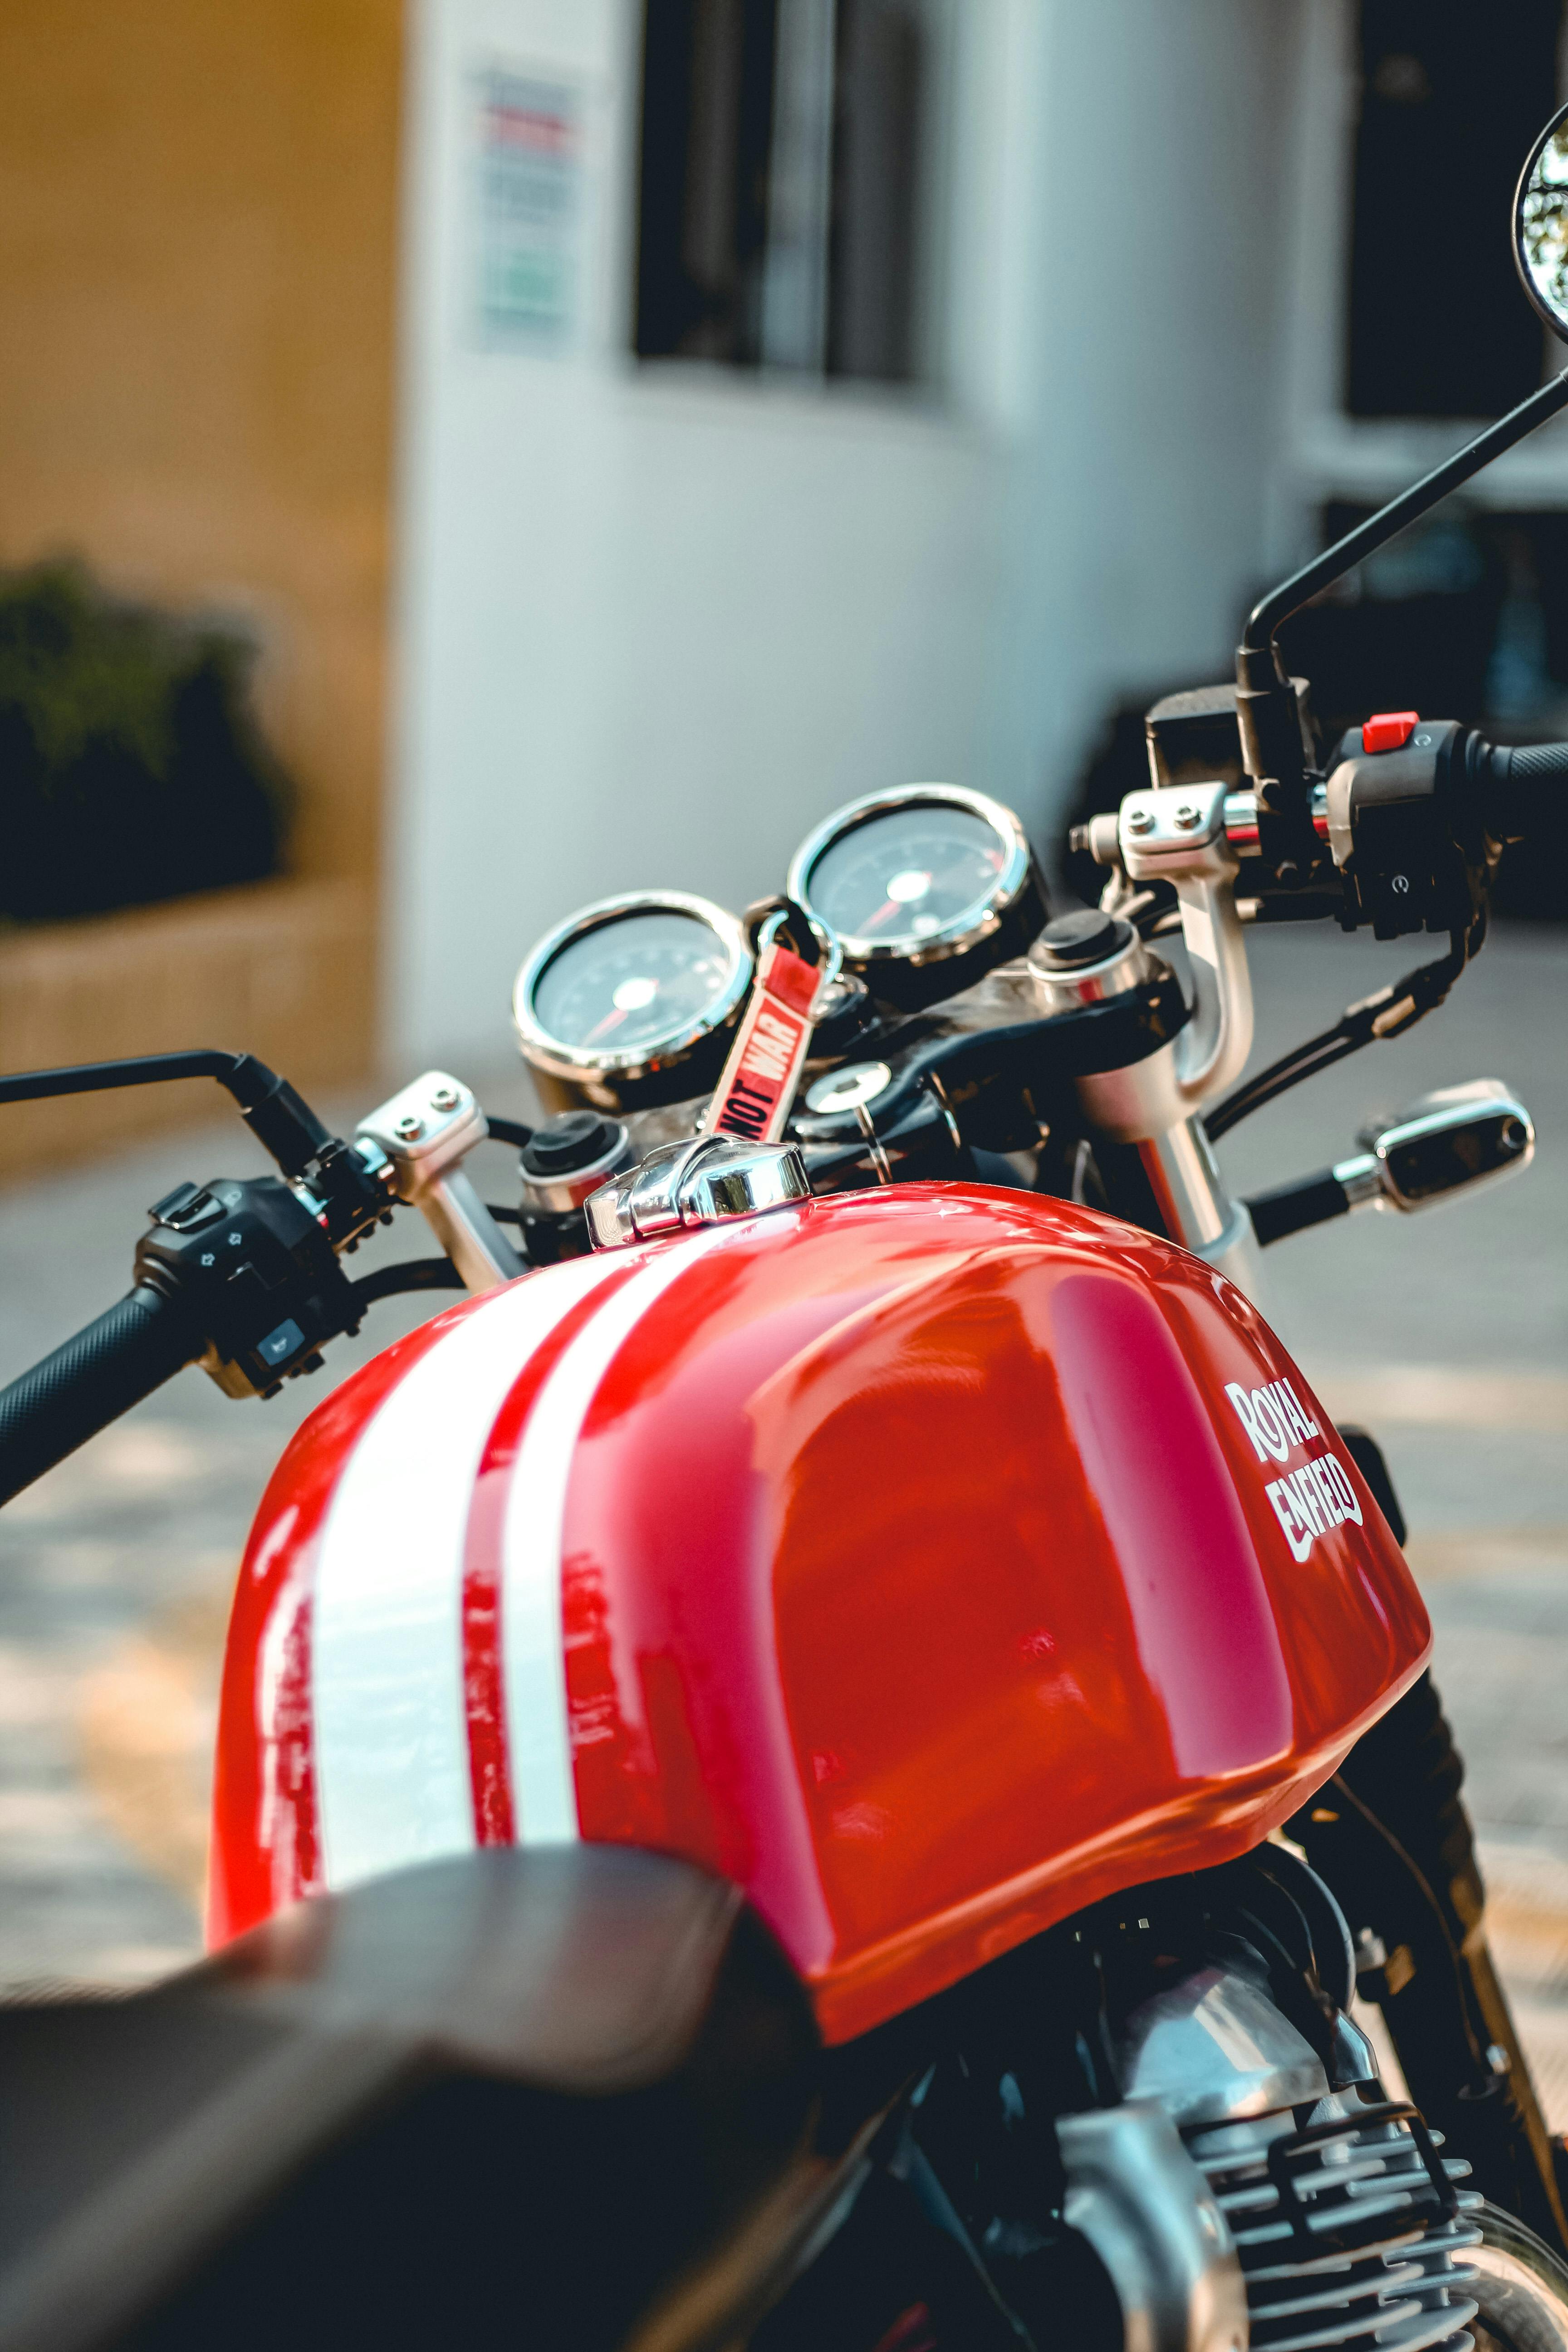 Royal Enfield Motorcycle · Free Stock Photo